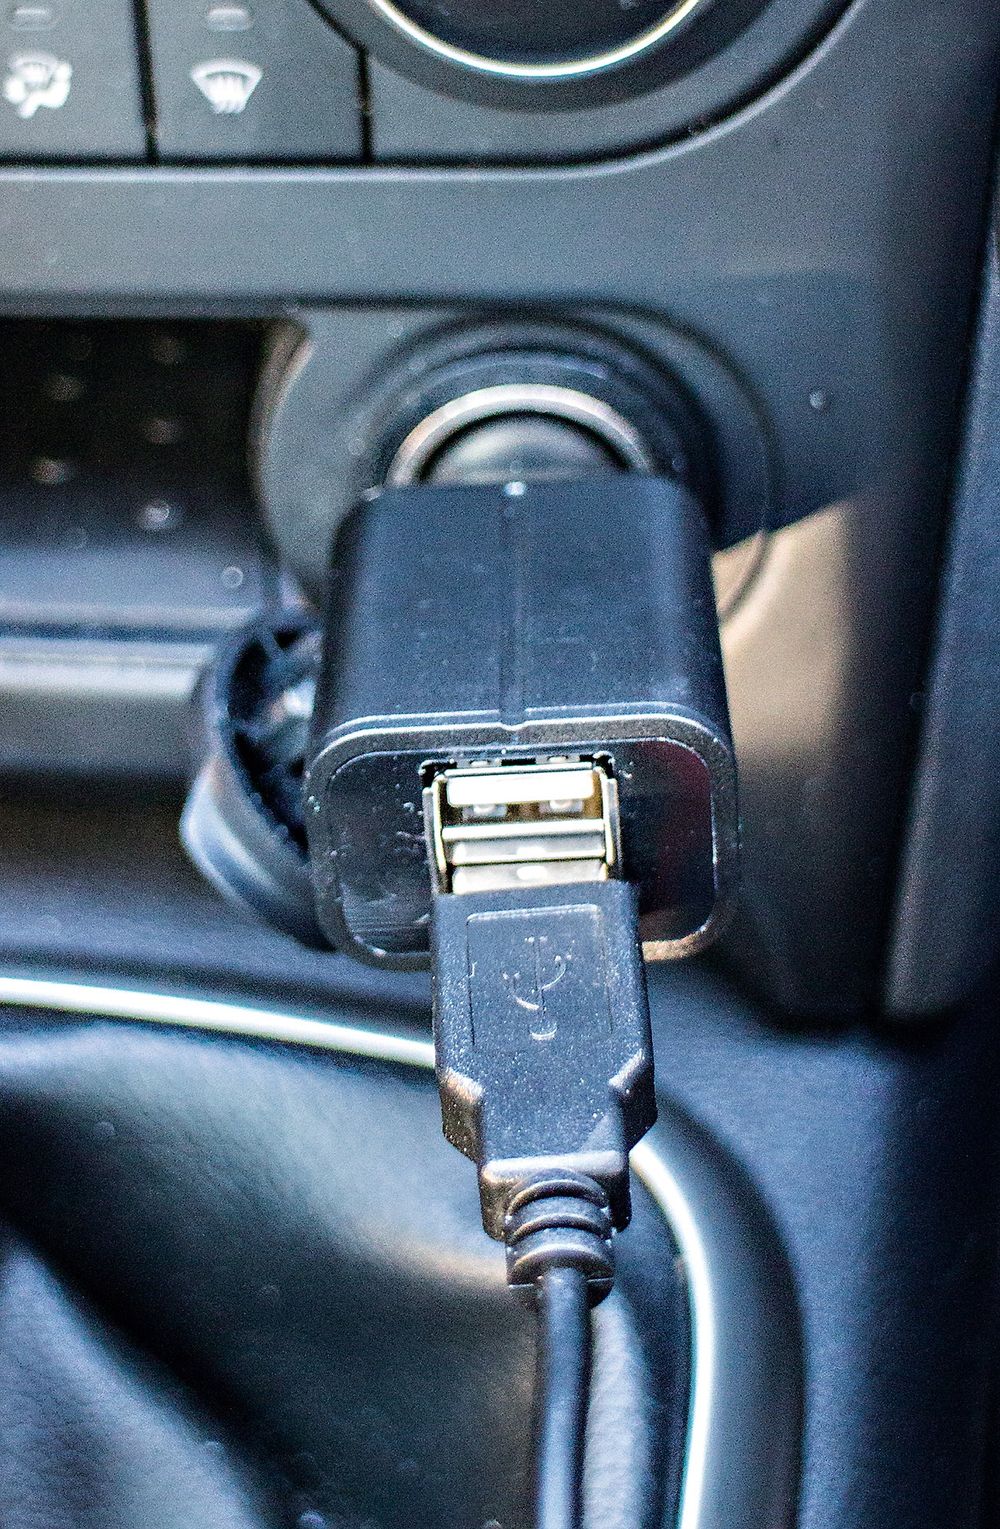 Strøm: 12-voltuttaket i bilen gir strøm til to 5 volt USB-kontakter. Det ener driver radioen, det andre kan du lade mobilen med.